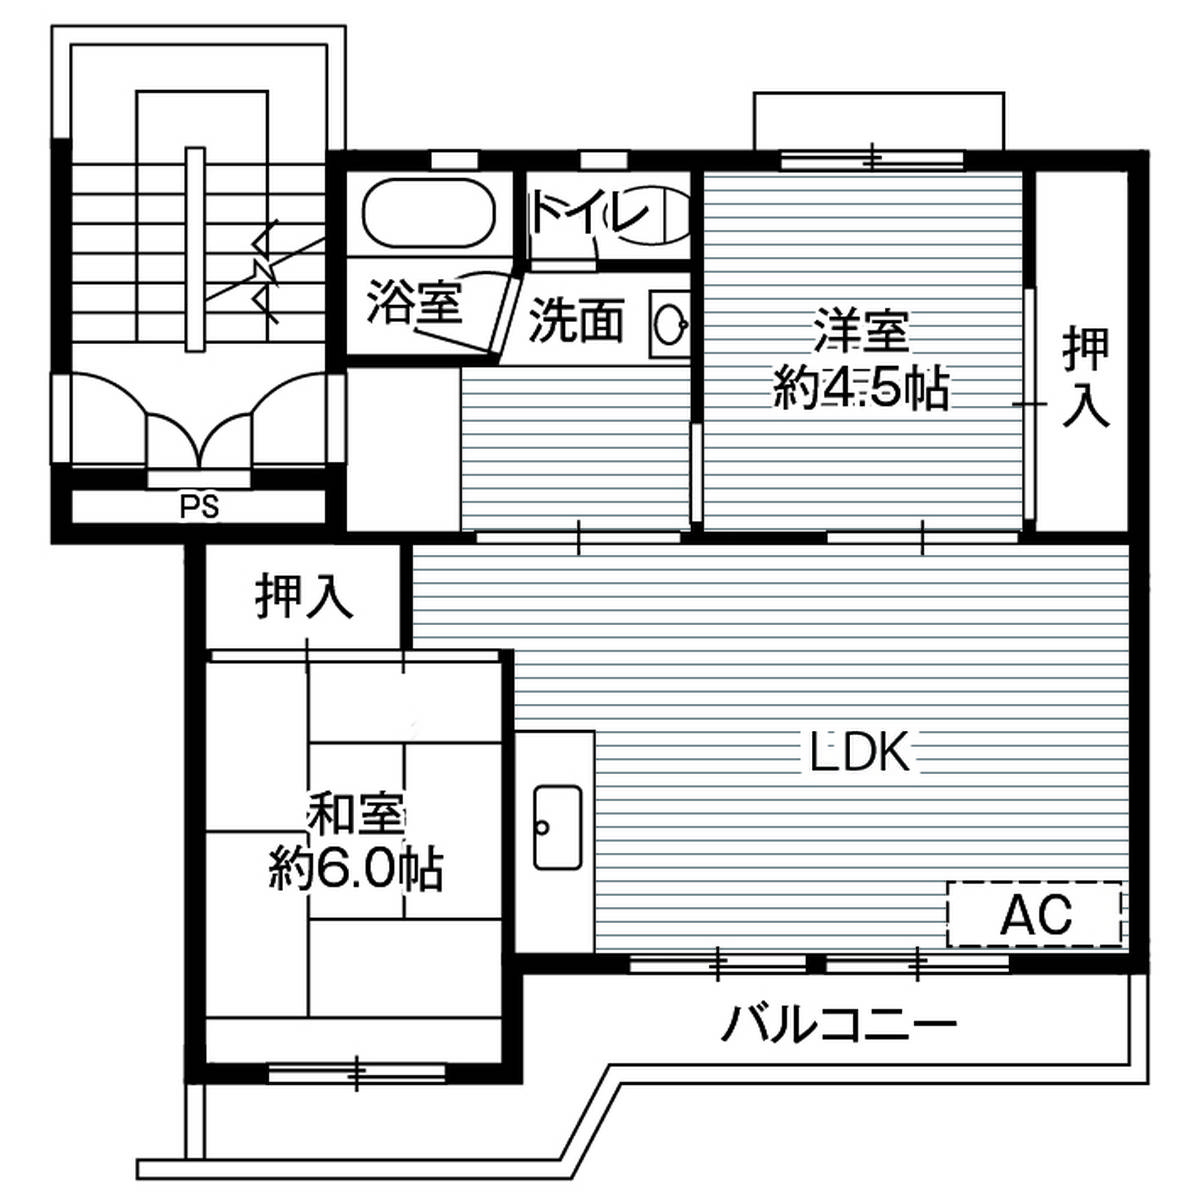 2LDK floorplan of Village House Ashikaga Hajika in Ashikaga-shi